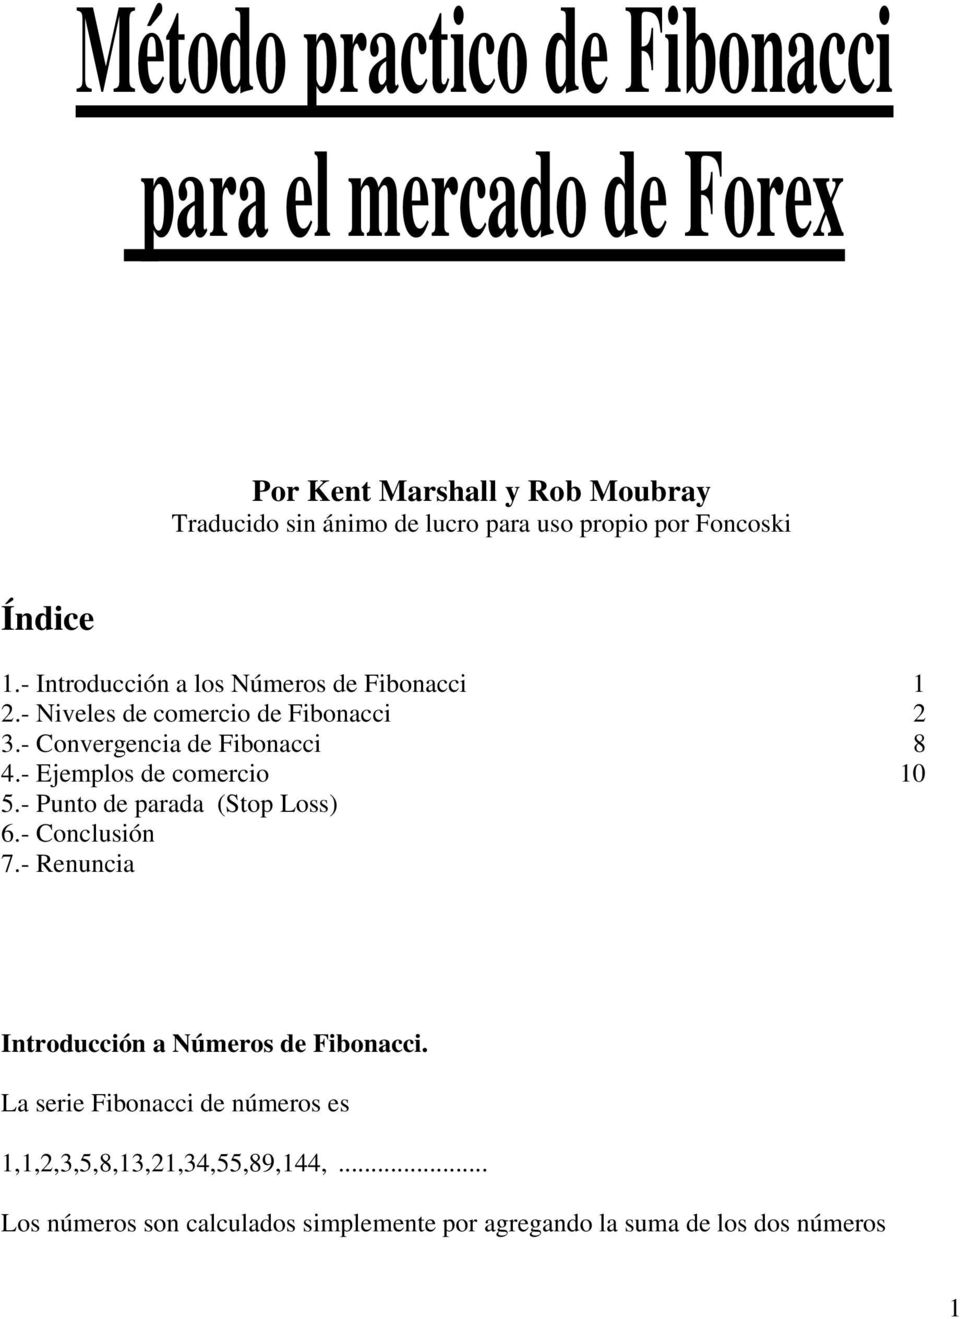 free pdf forex carte comentarii despre opțiuni binare corsa capital